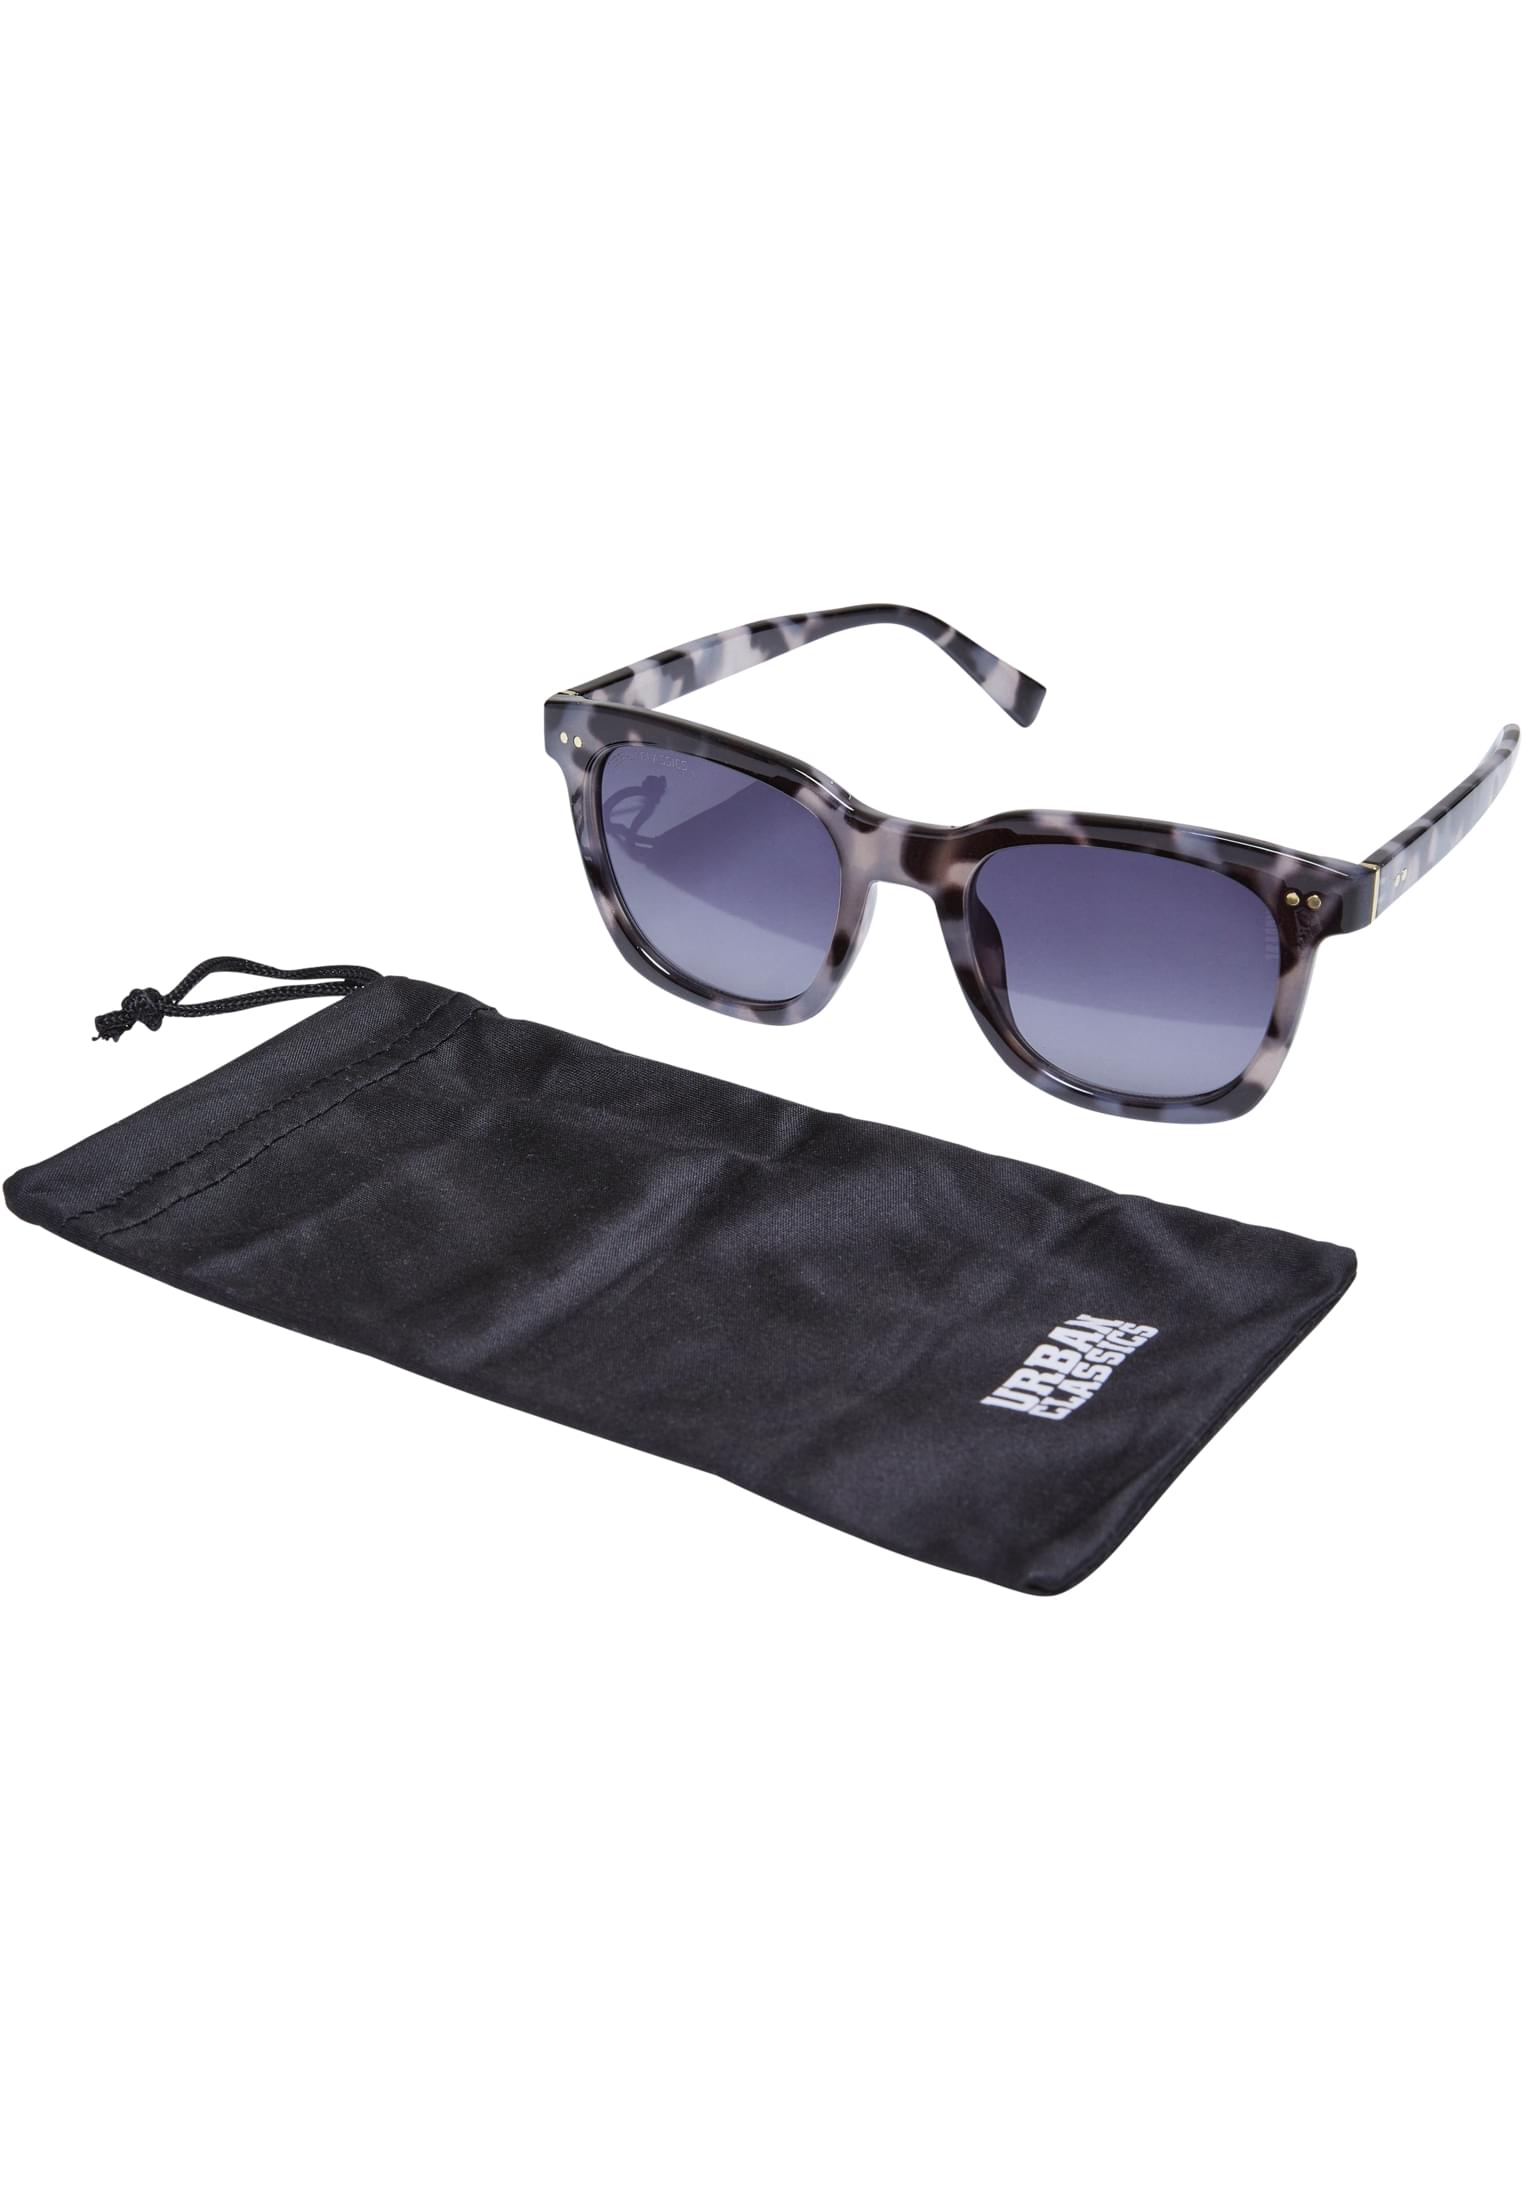 Sunglasses Naples amber/black